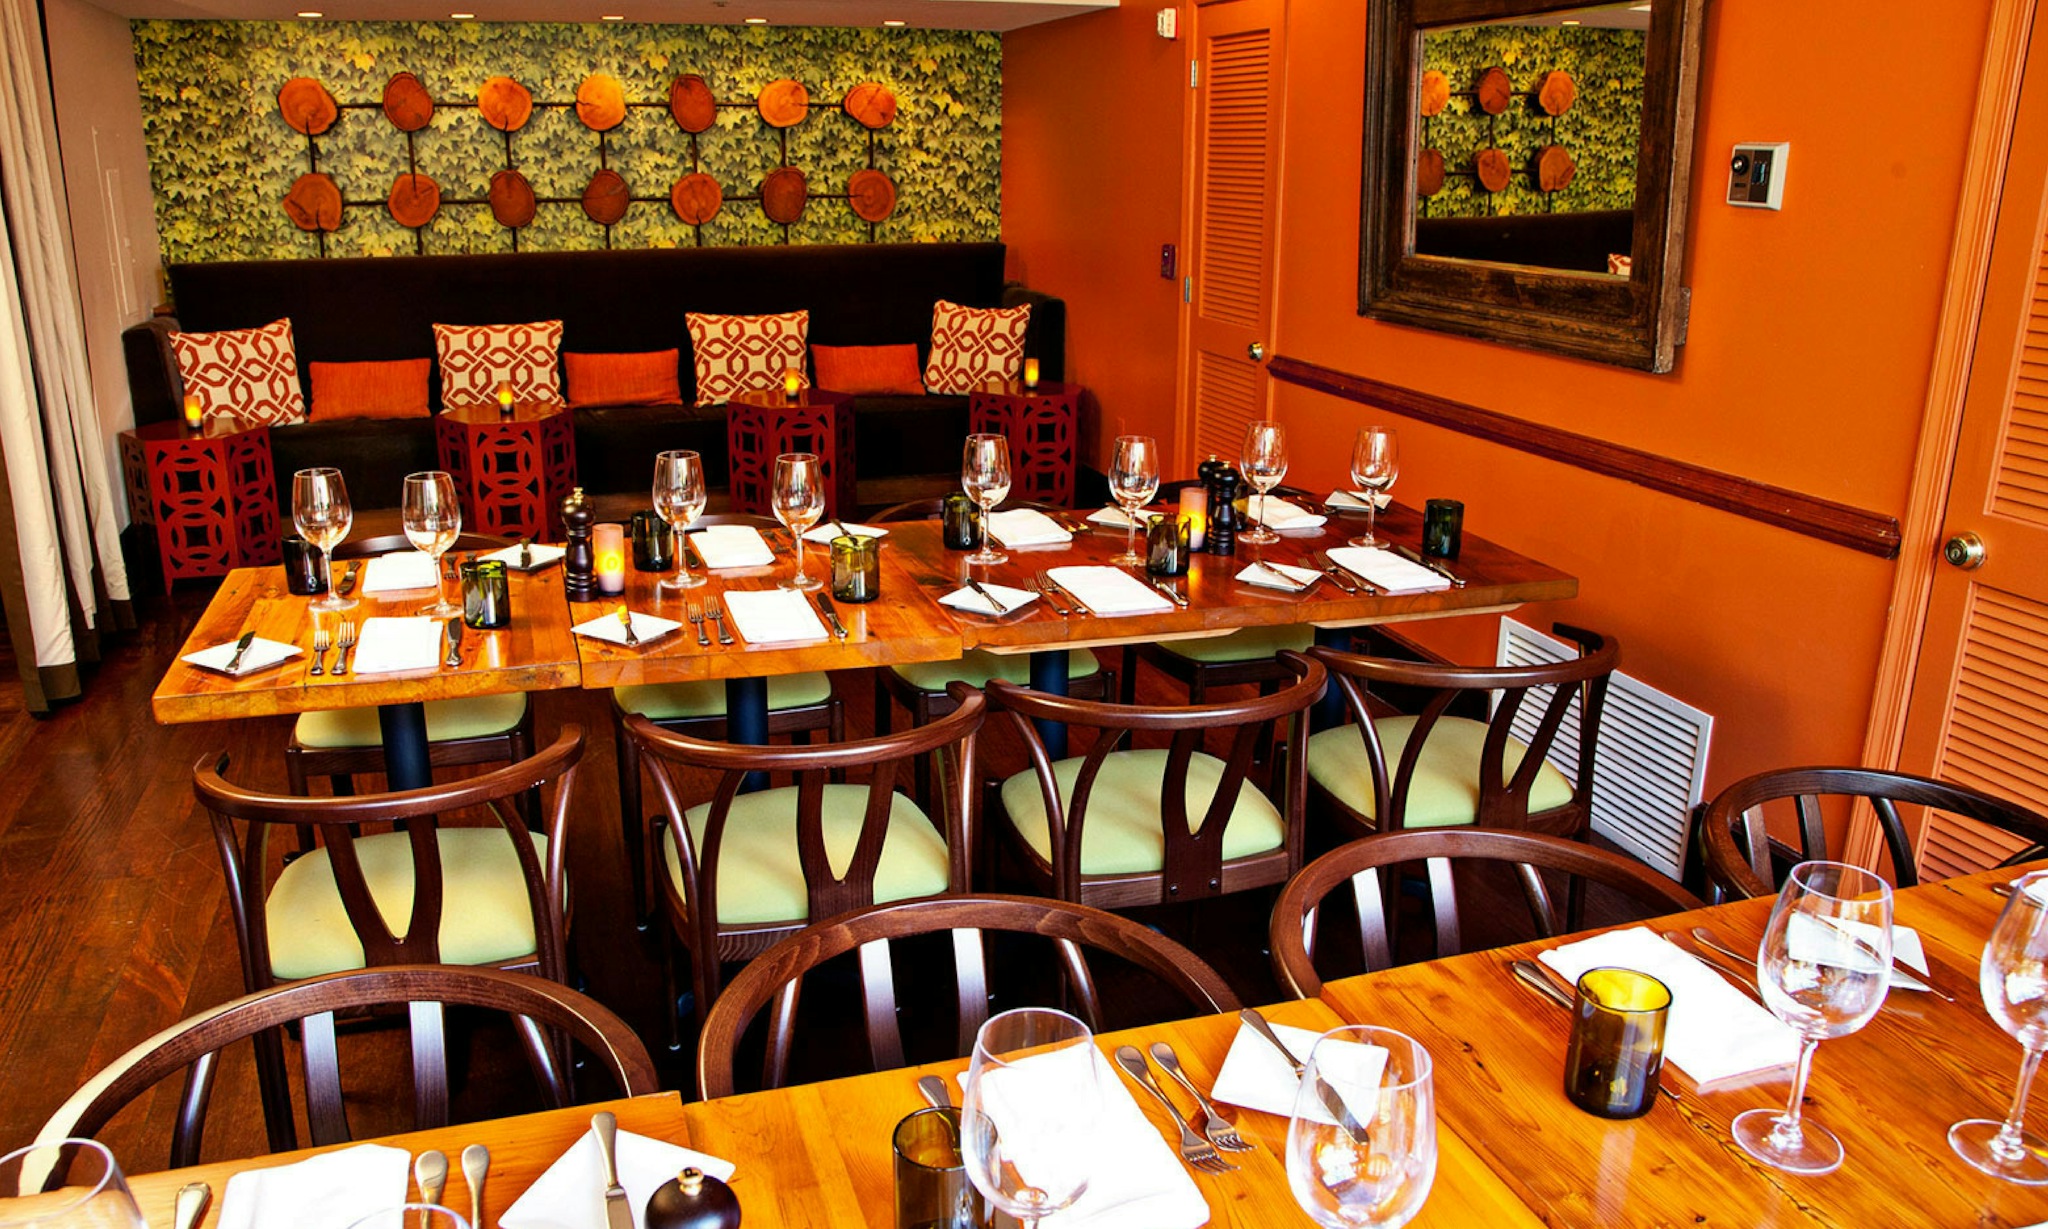 bright orange walls and colorful tile create a fun dining room at kimpton hotel madera